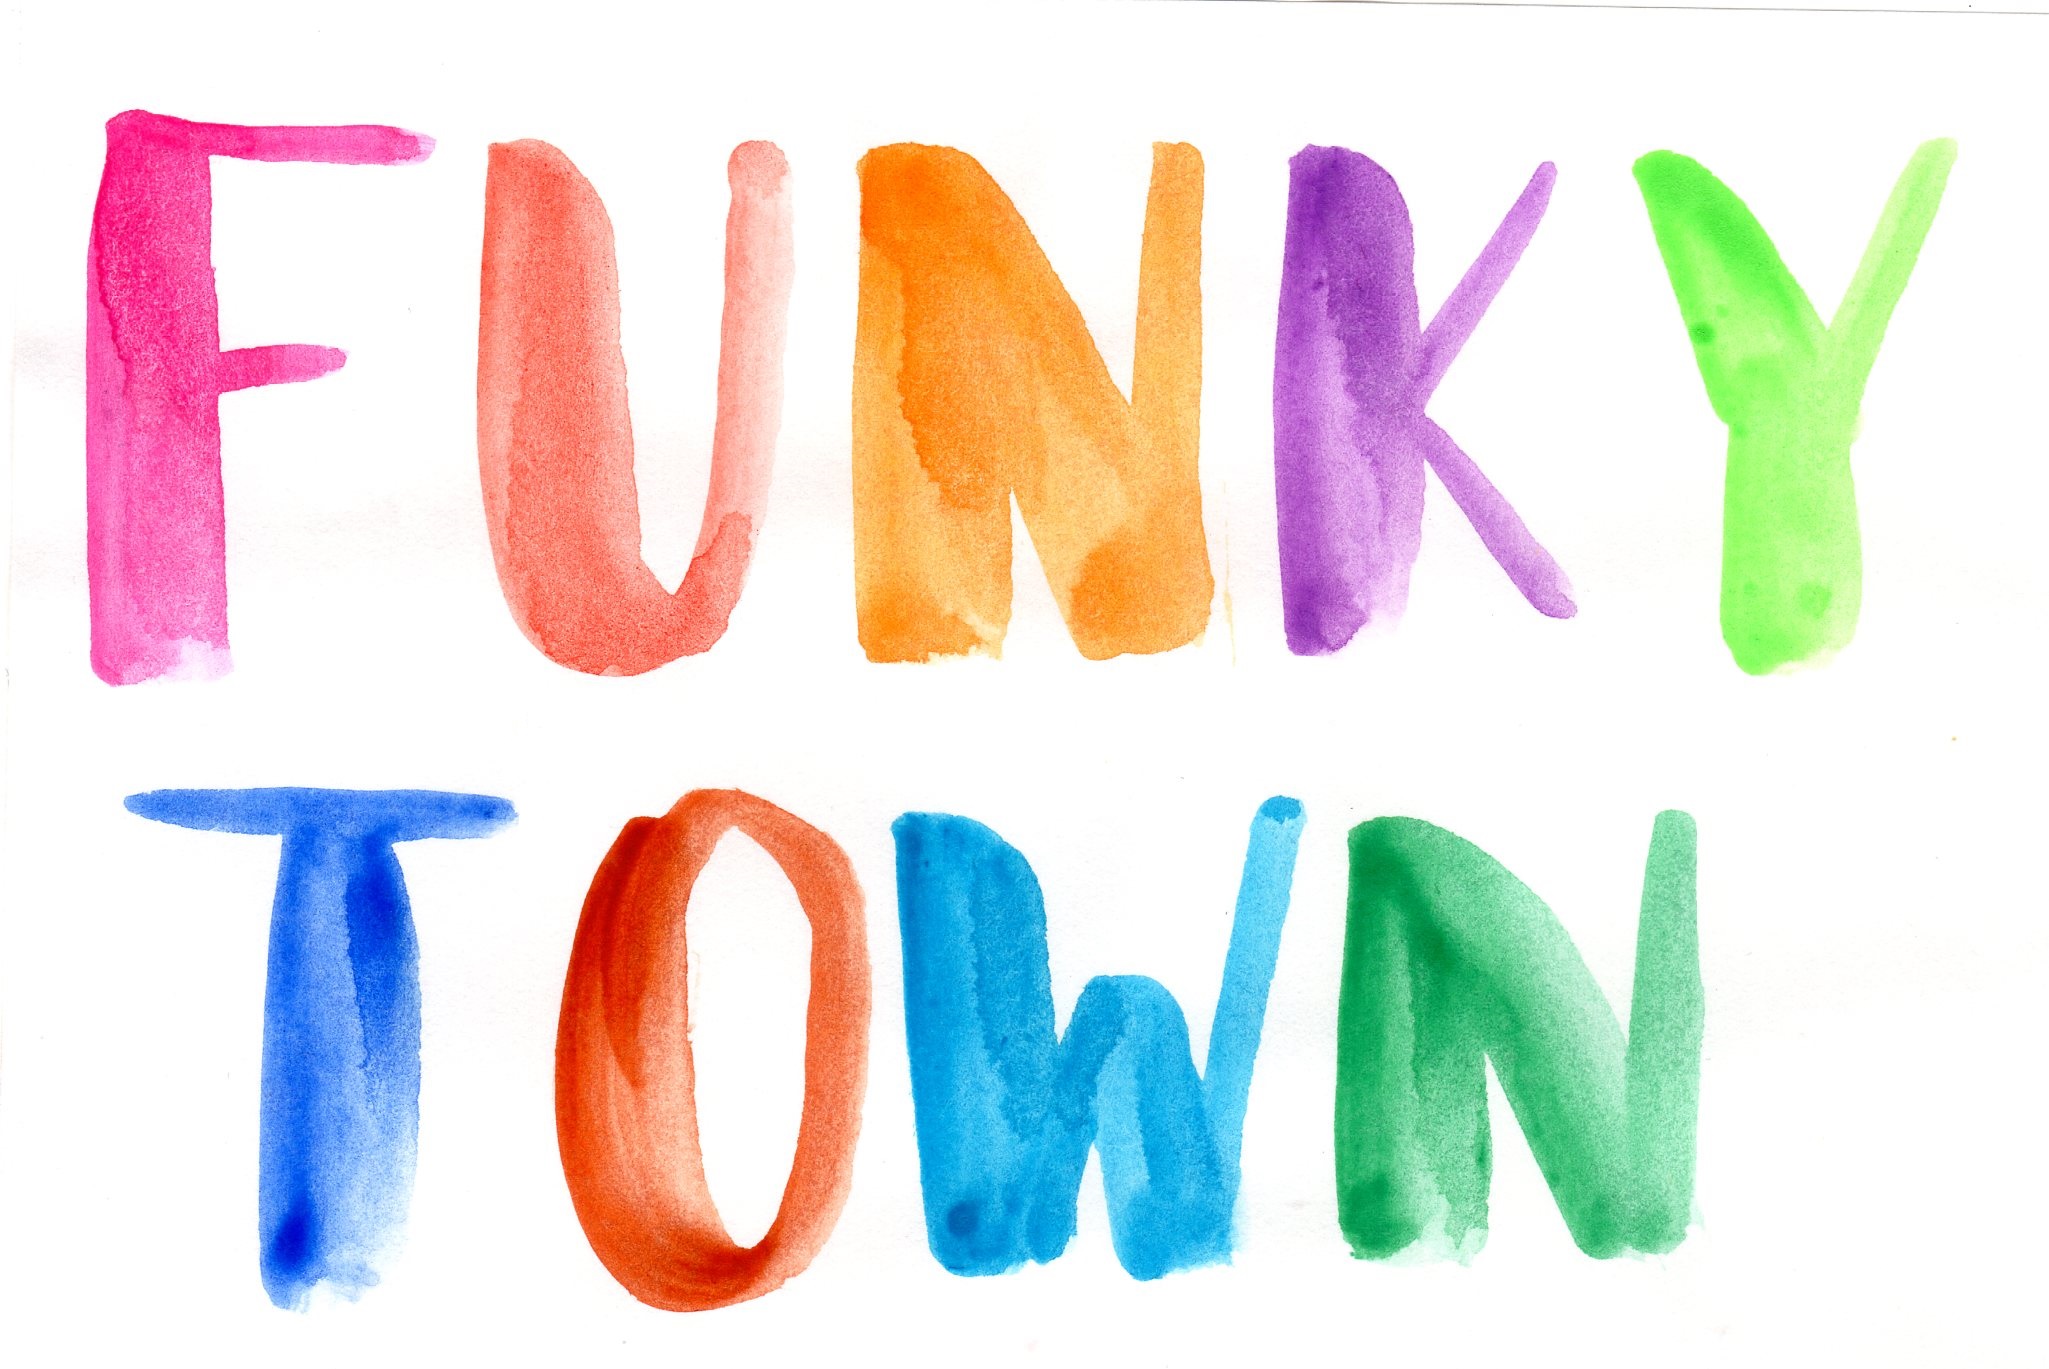 Sunday Song Journal #4: Funkytown